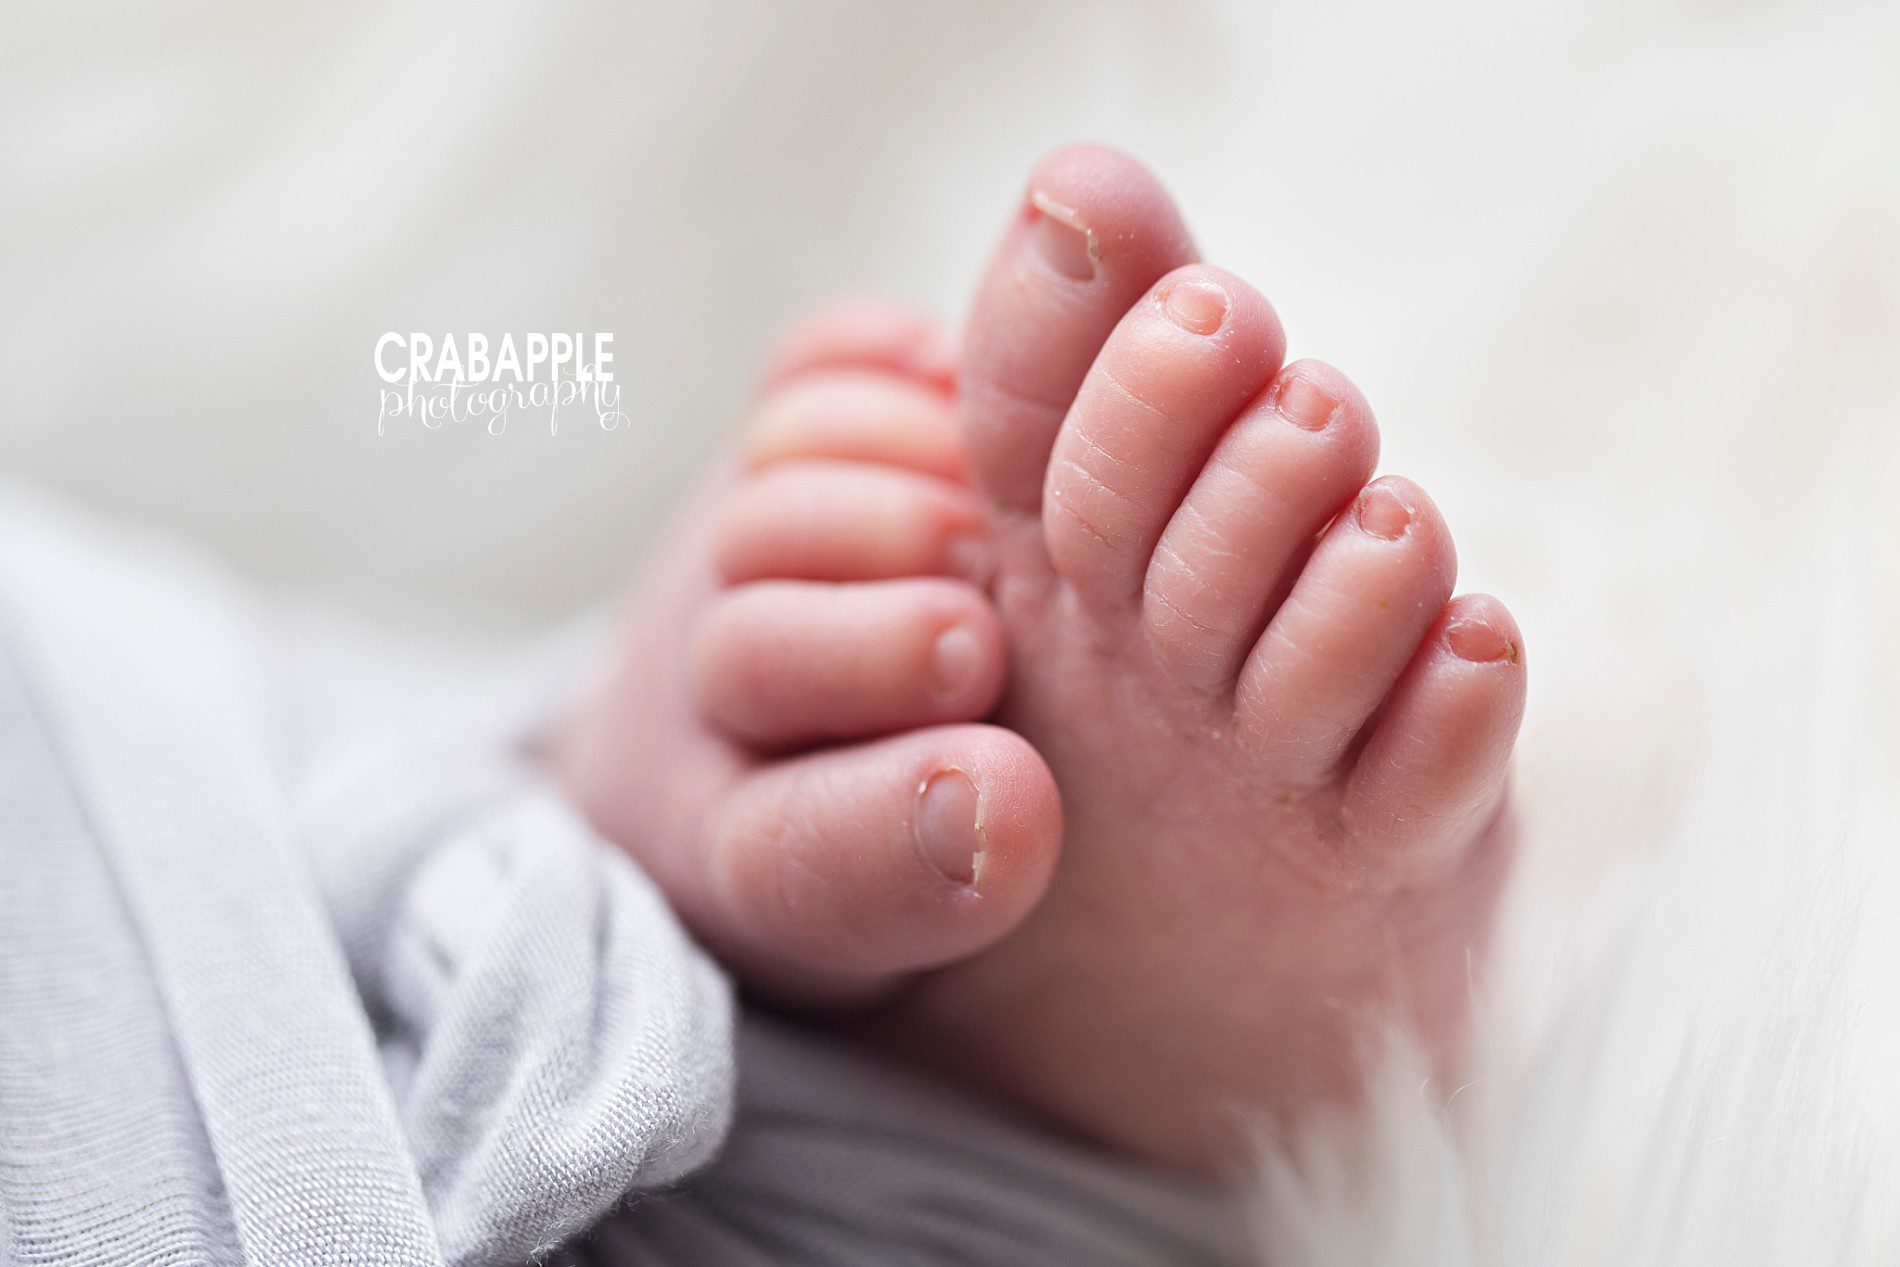 newborn toes photos